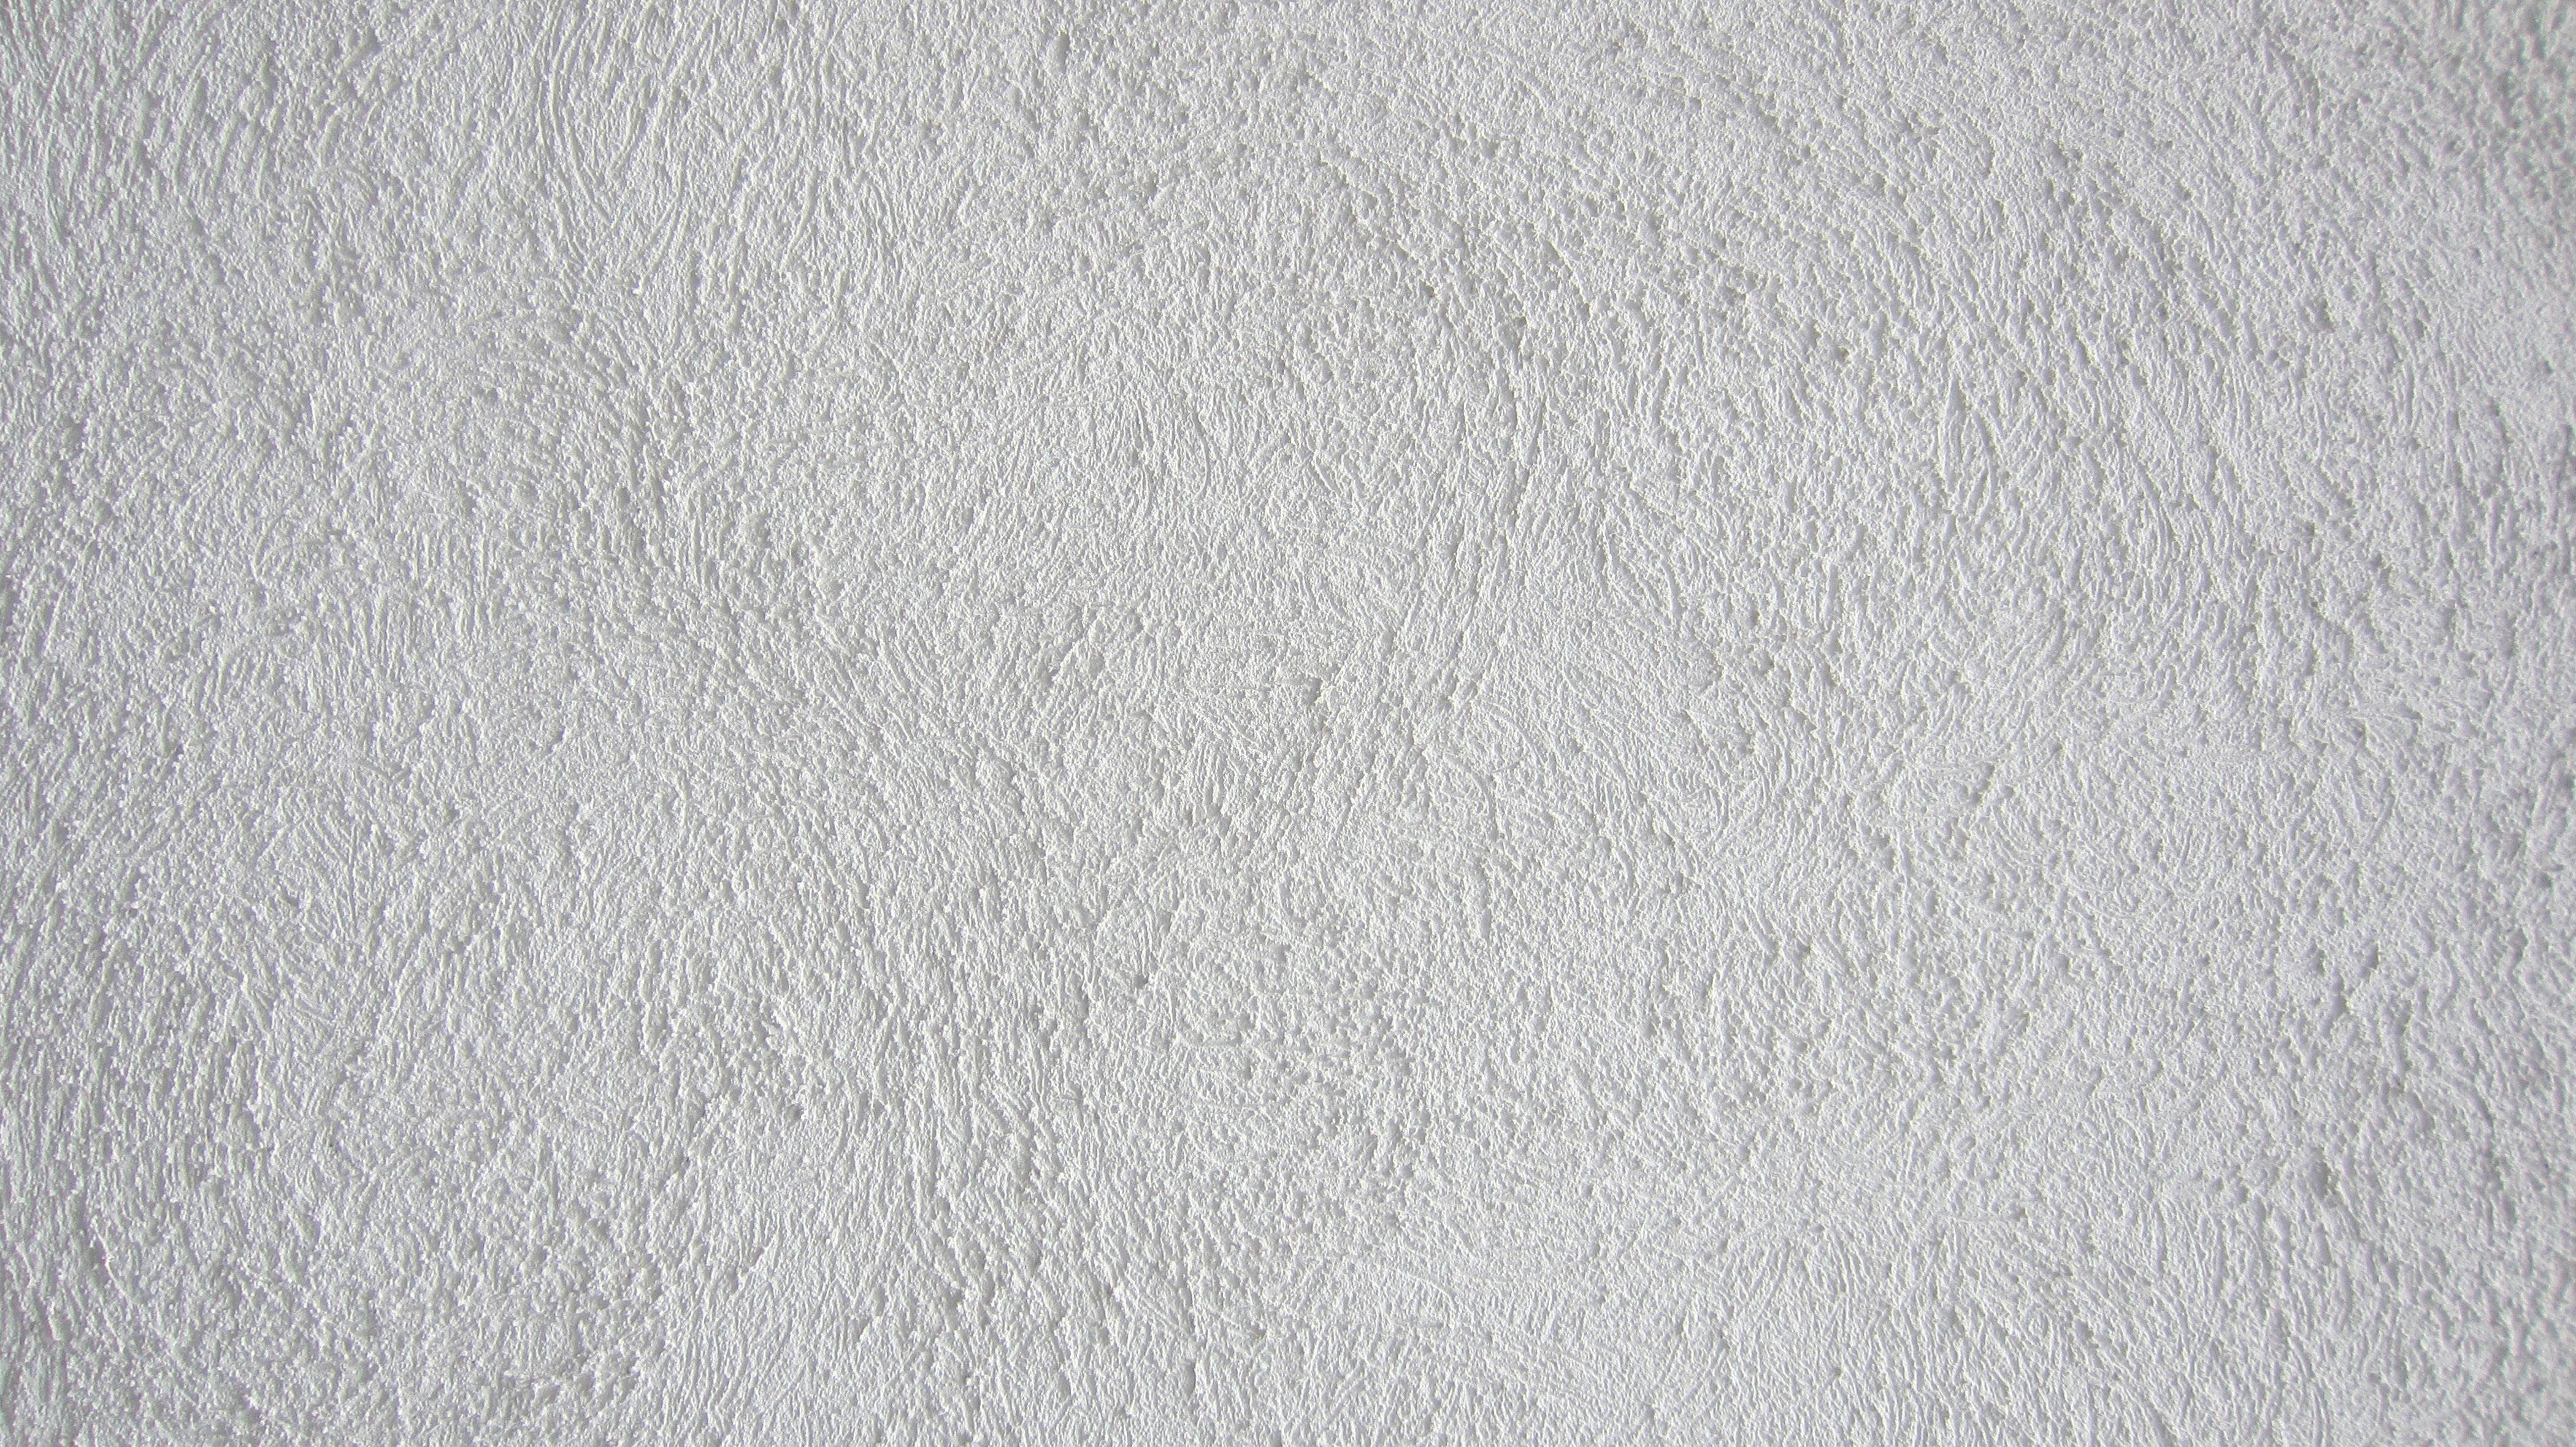 structure white texture floor home wall asphalt line facade tile ...